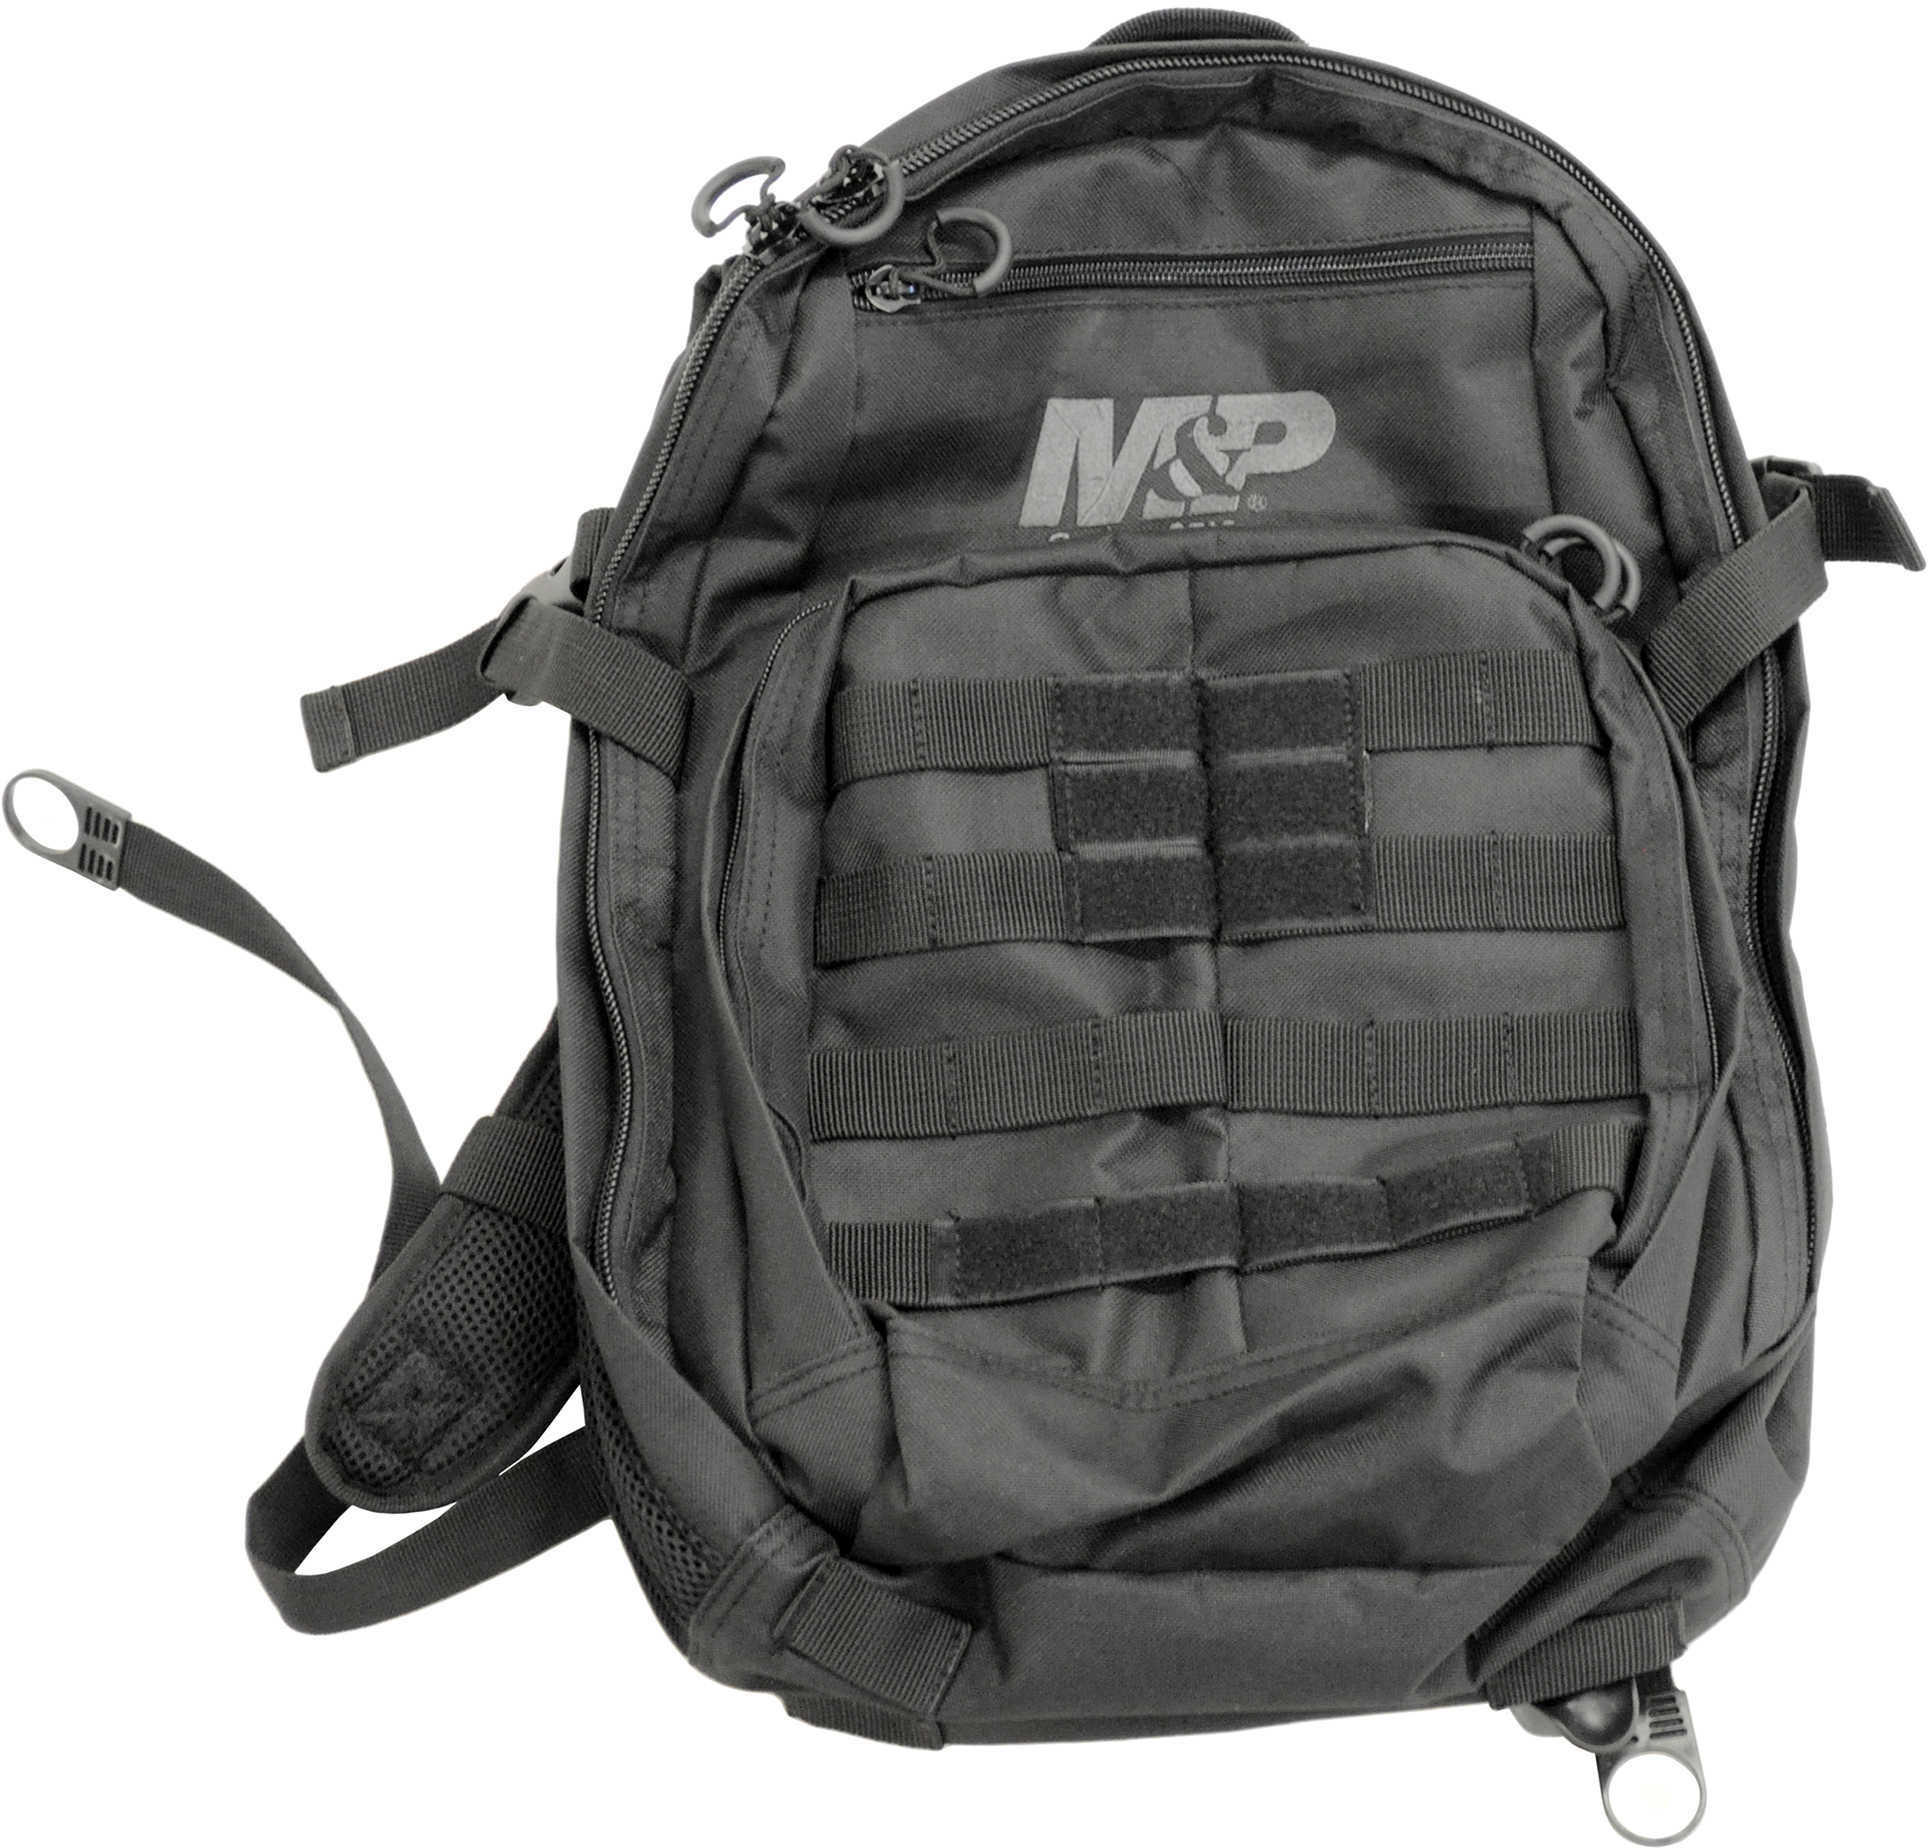 Caldwell Duty Series Backpack, Black Md: 110017